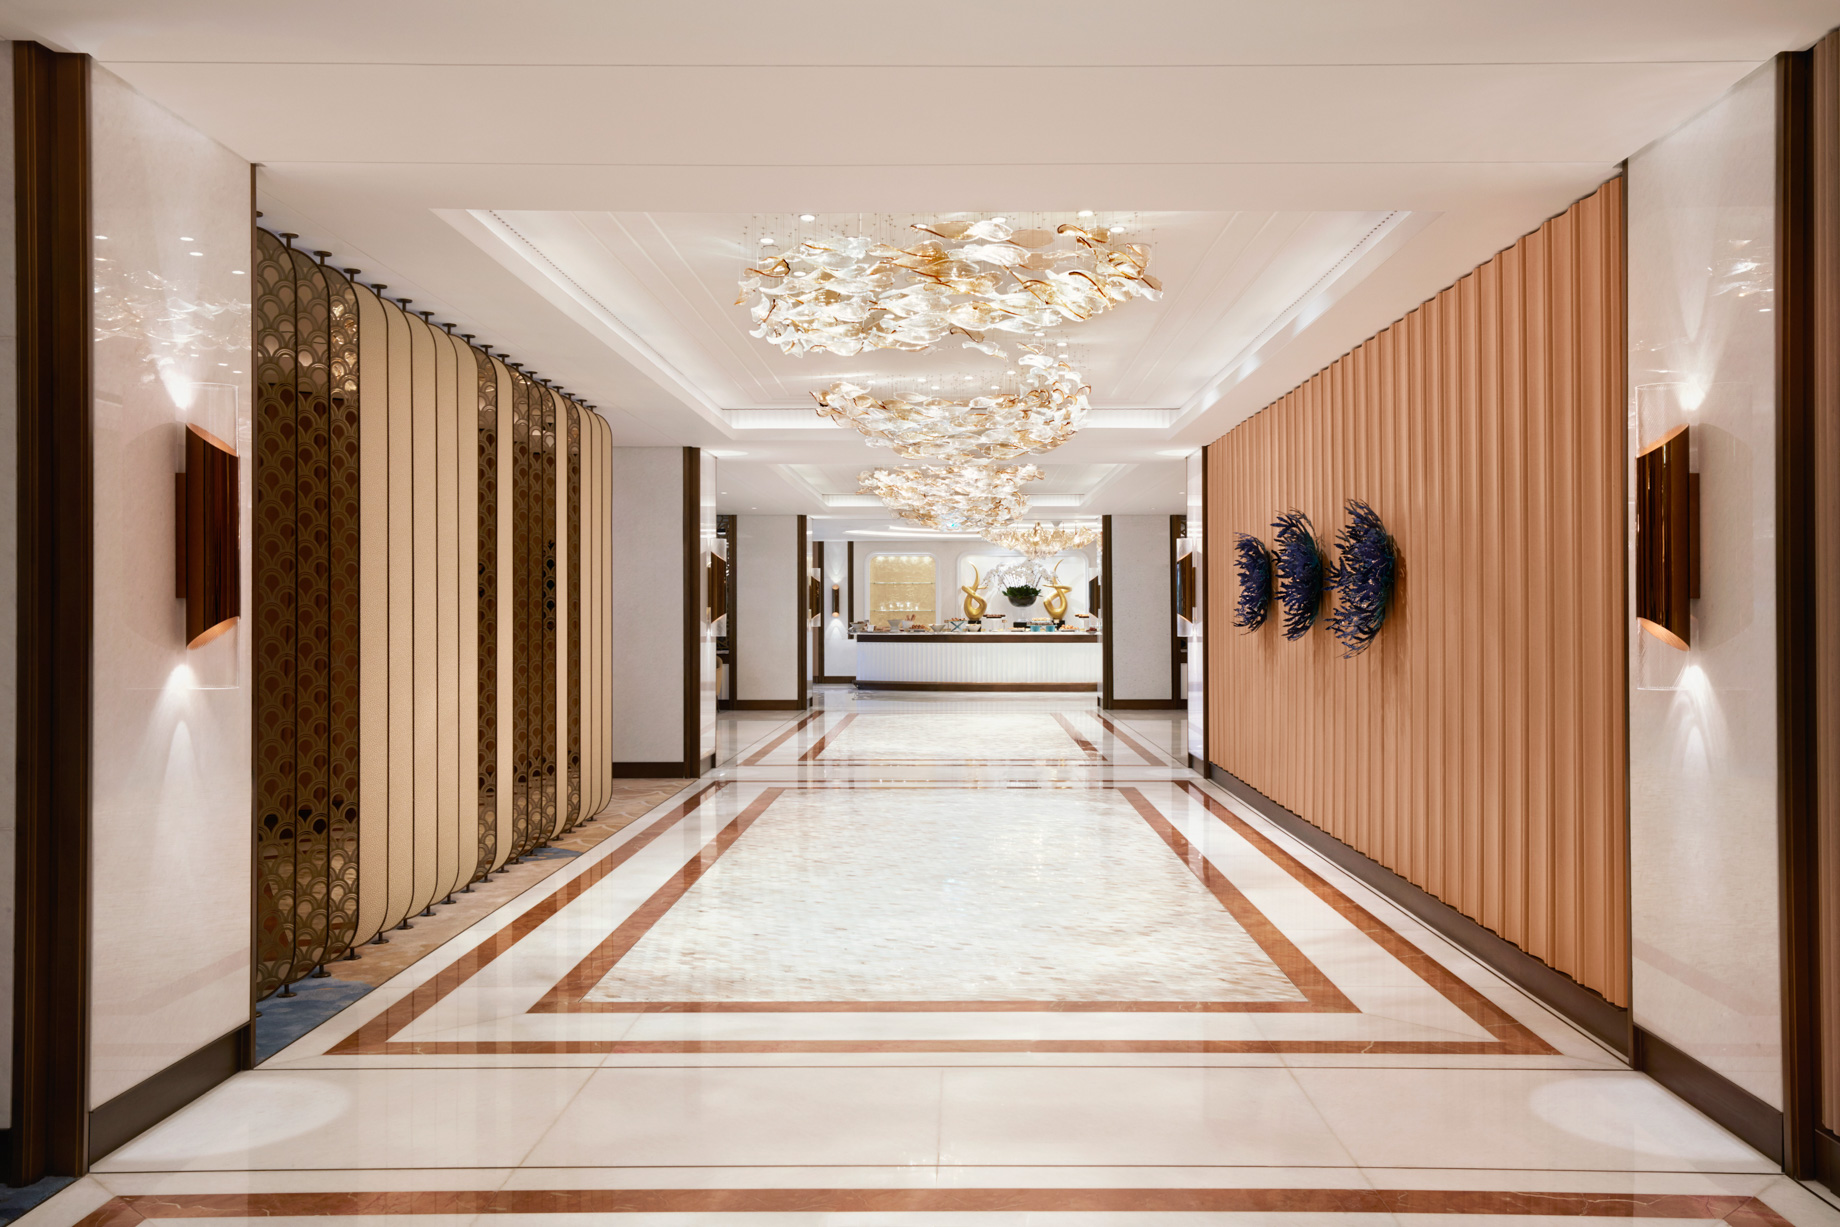 Atlantis The Palm Resort – Crescent Rd, Dubai, UAE – Hallway